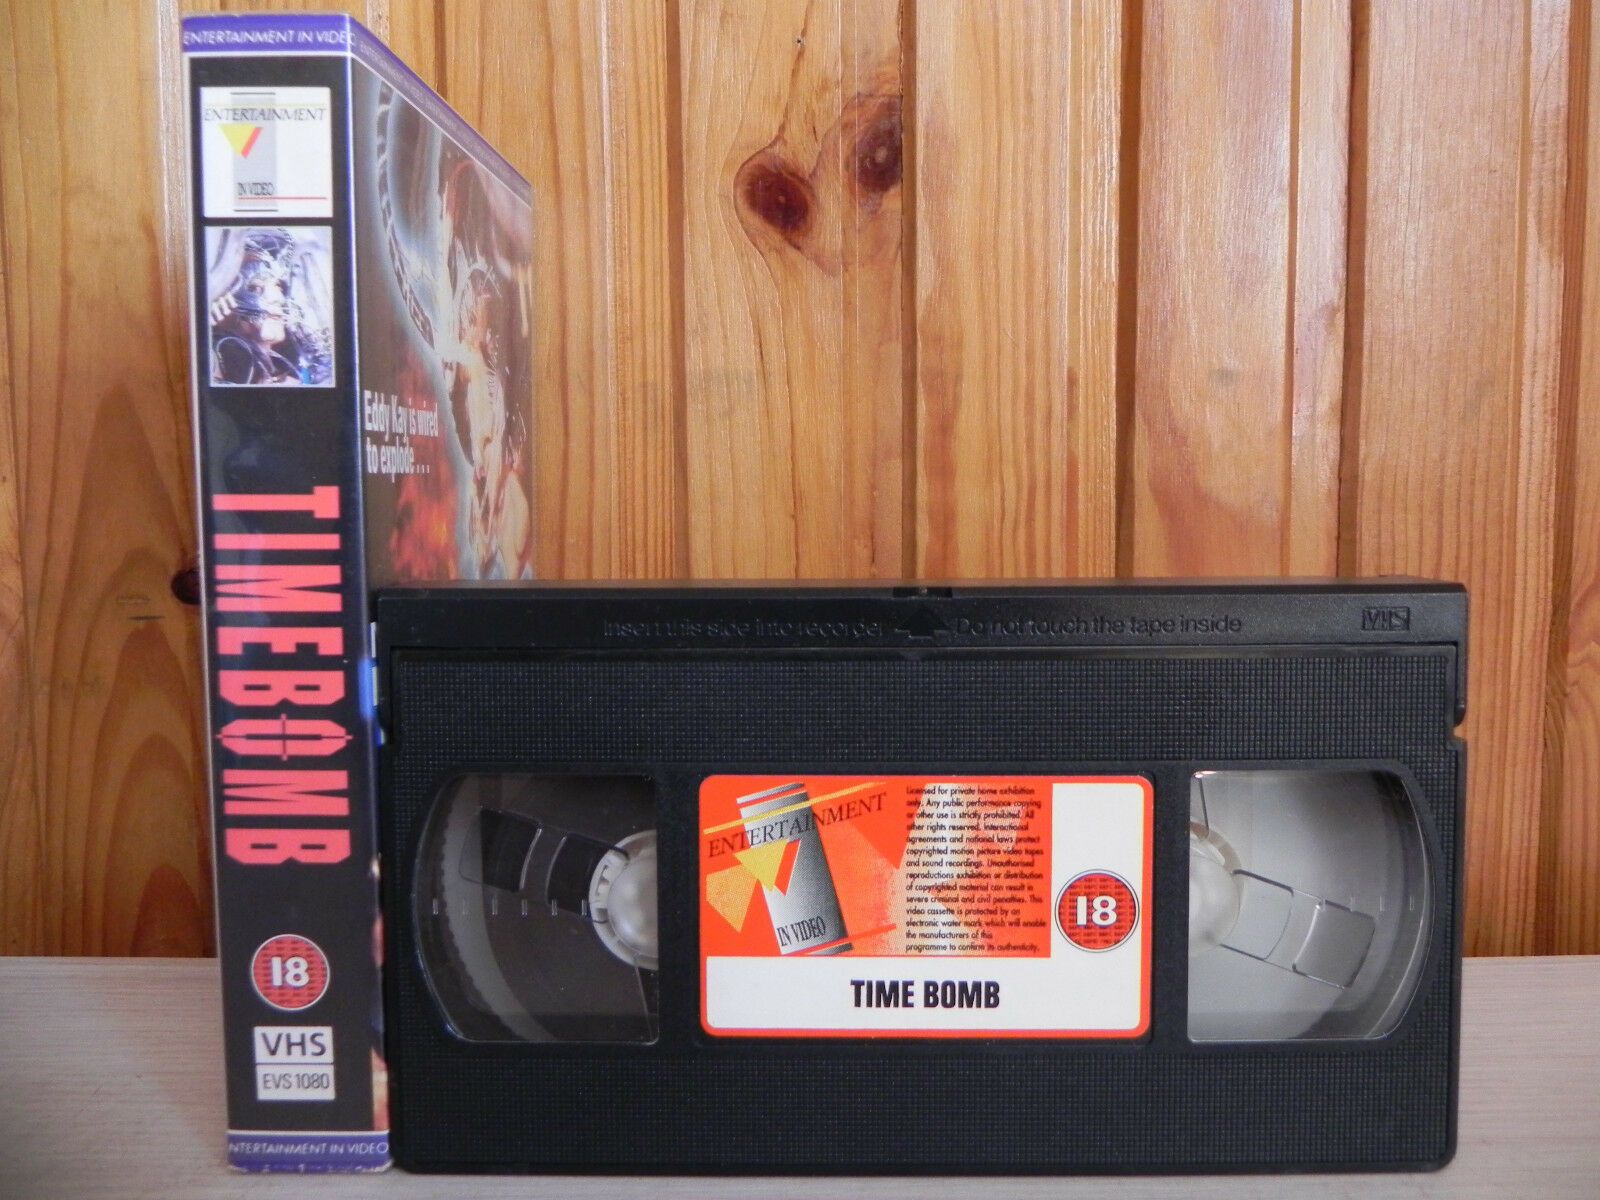 Timebomb - Patsy Kensit - 1991 - Action Drama - Sci-Fi - Vintage Video - Pal VHS-